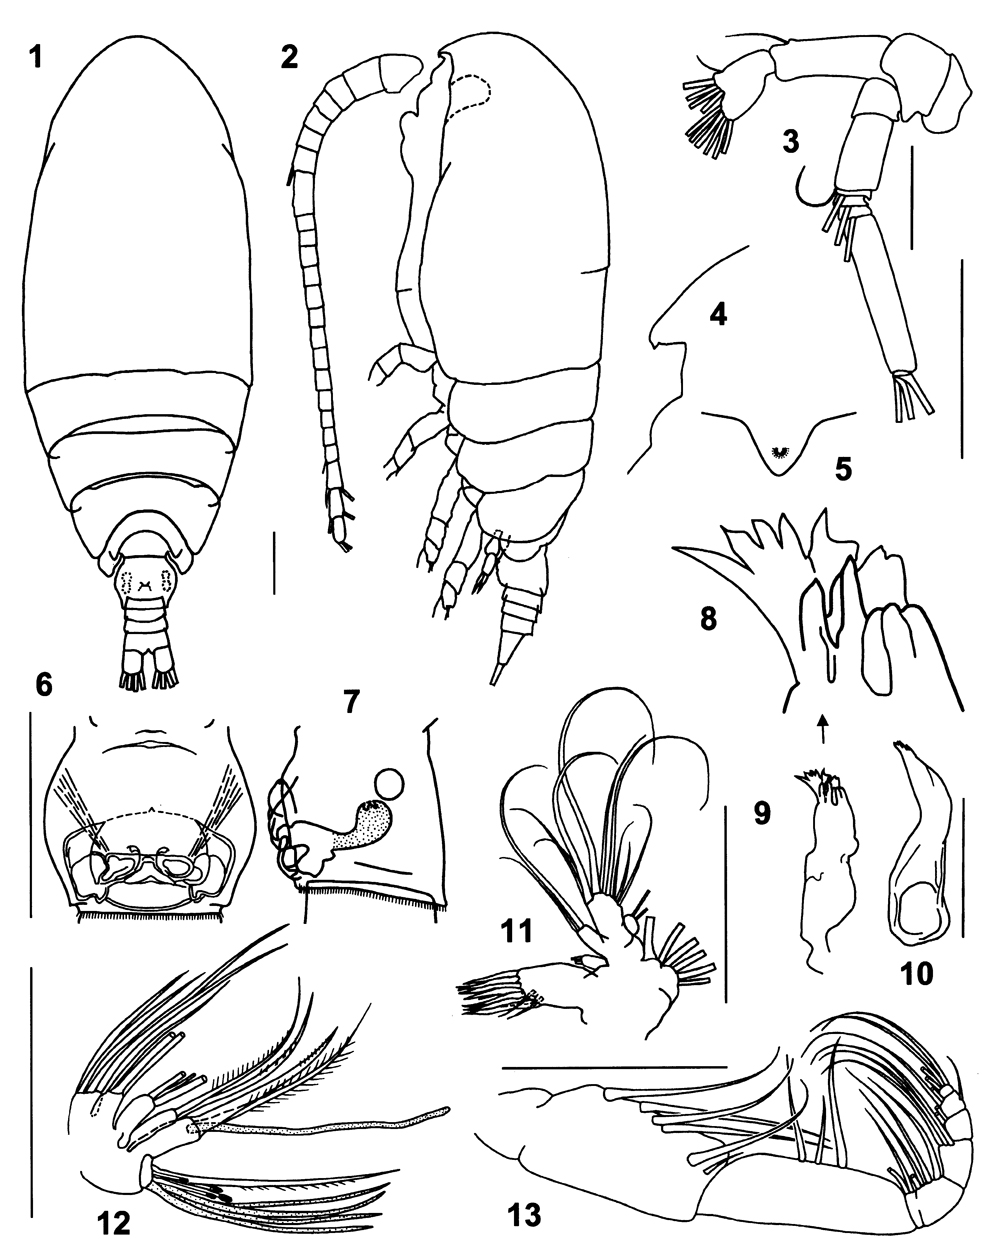 Species Brodskius arcticus - Plate 1 of morphological figures